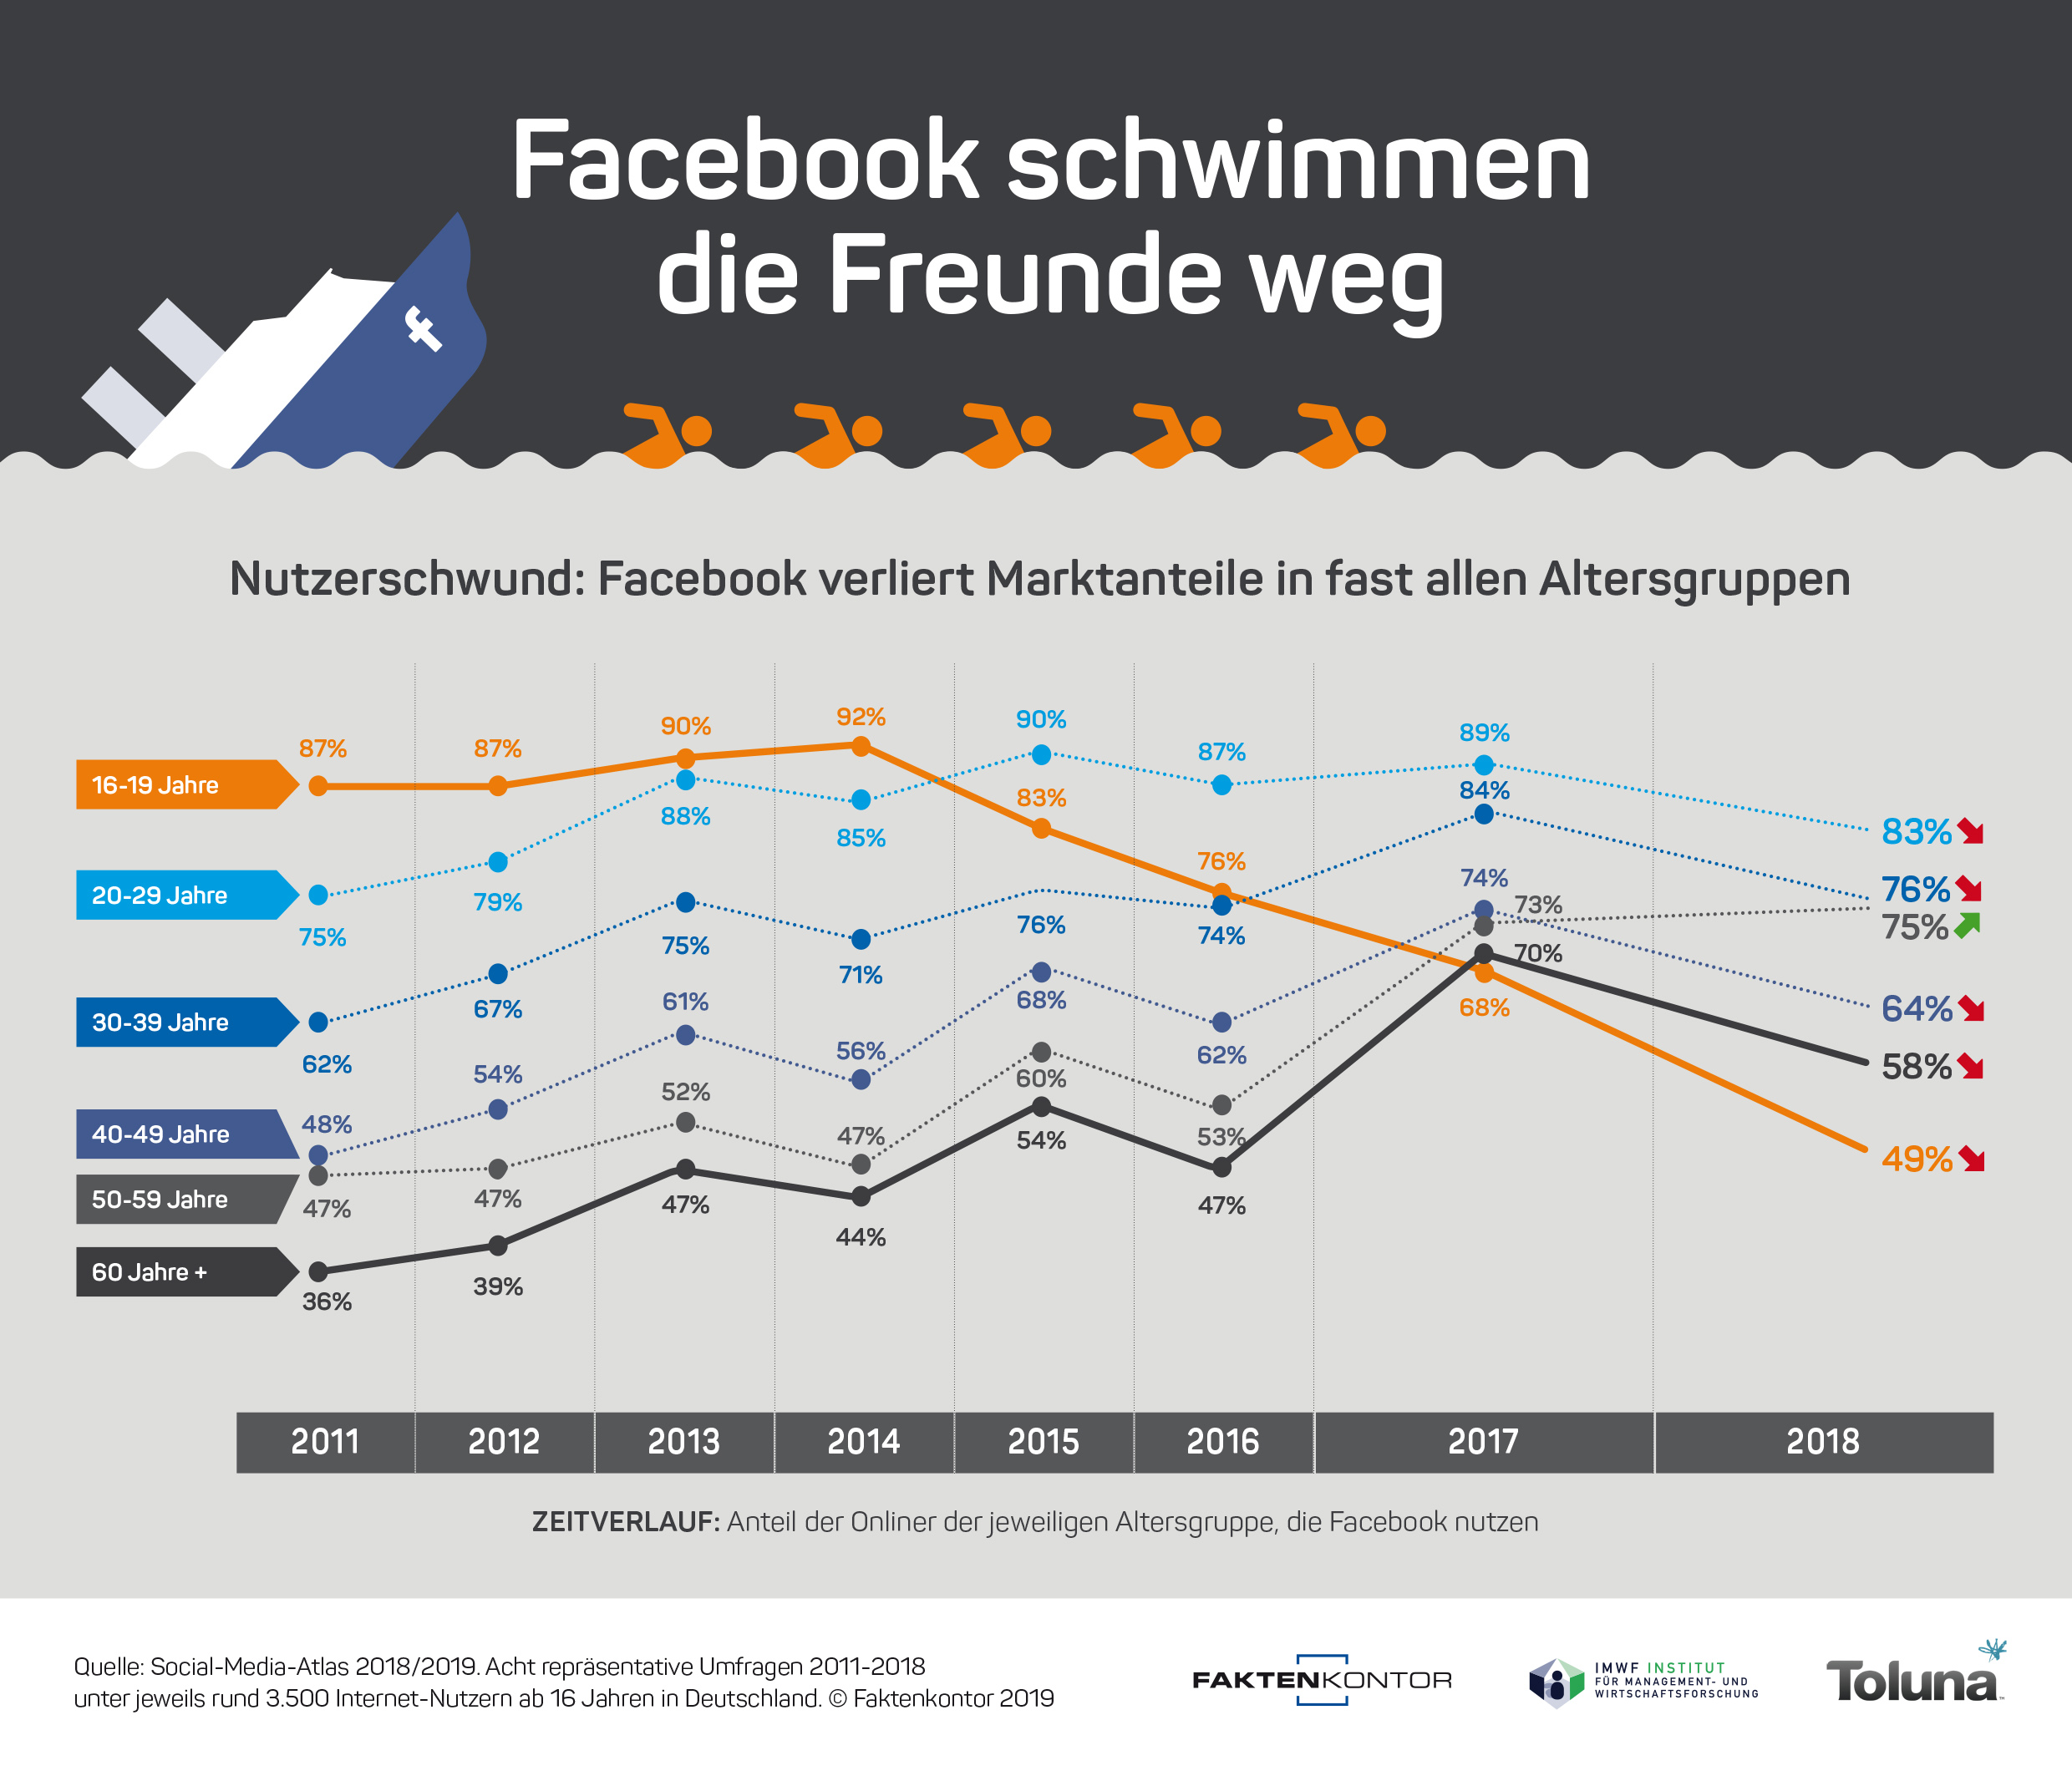 Infografik-Facebook-schwimmen-die-Freunde-weg-Nutzerwandel-Altersgruppen-2011-2018-Faktenkontor-Social-Media-Atlas-2018-2019